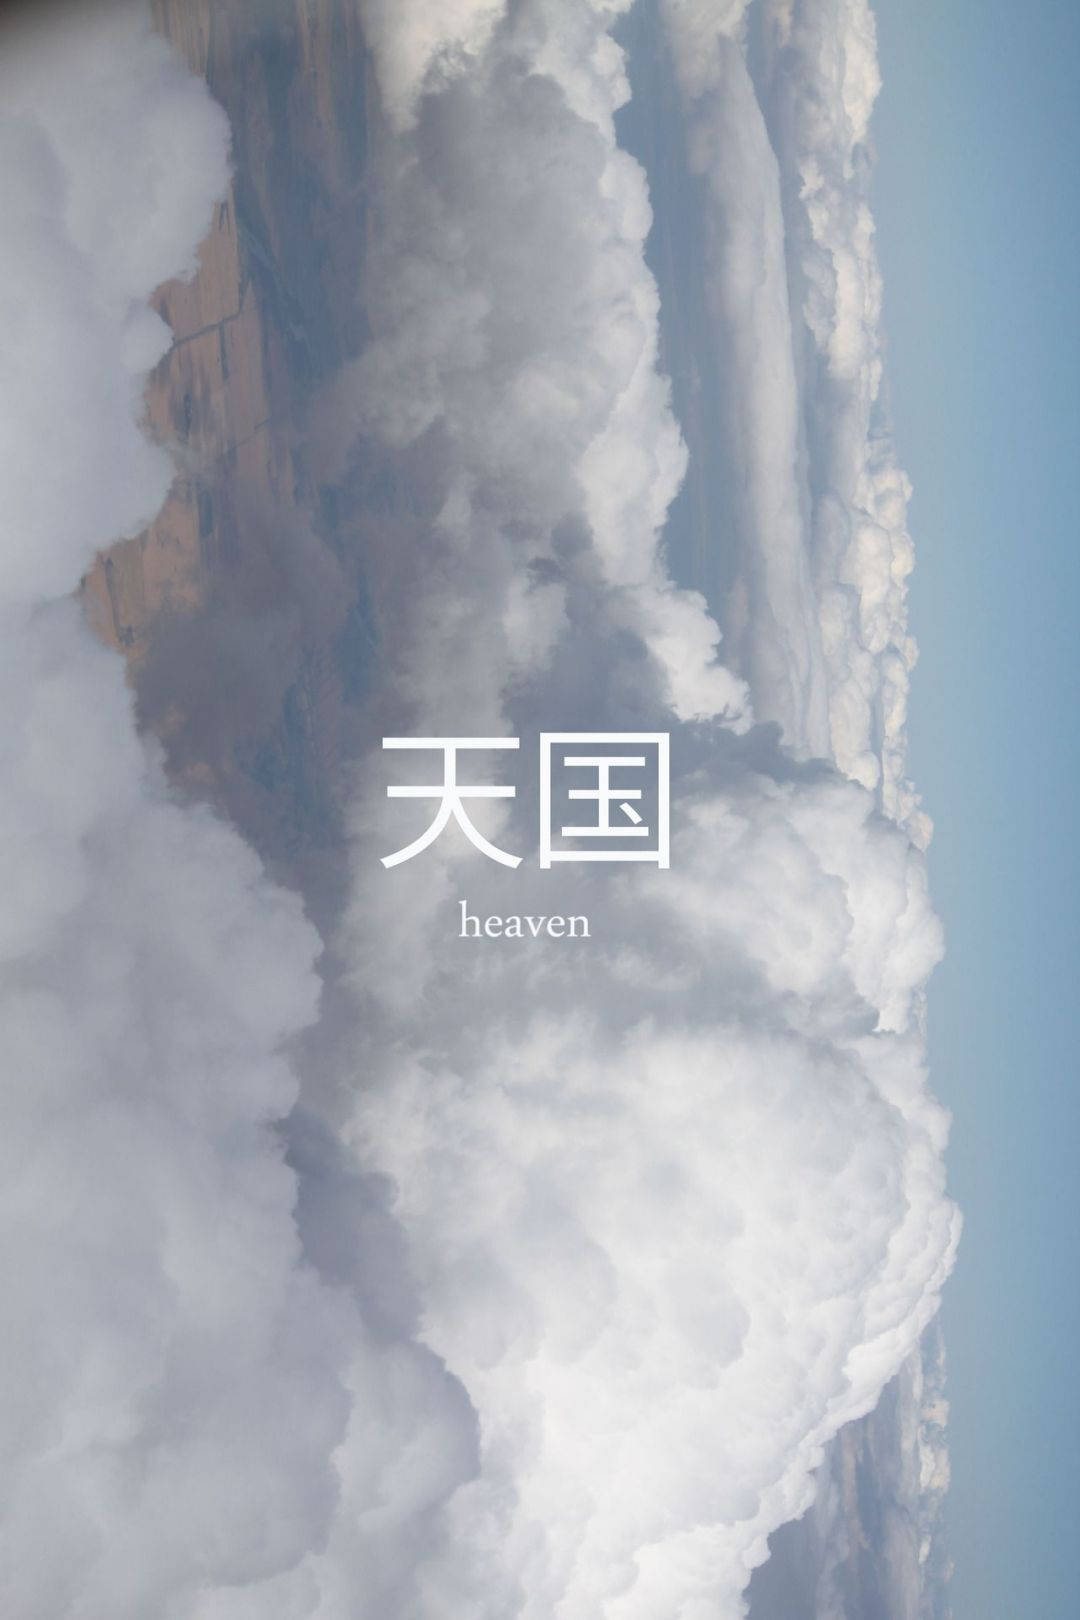 White Aesthetic Tumblr Clouds Heaven Kanji